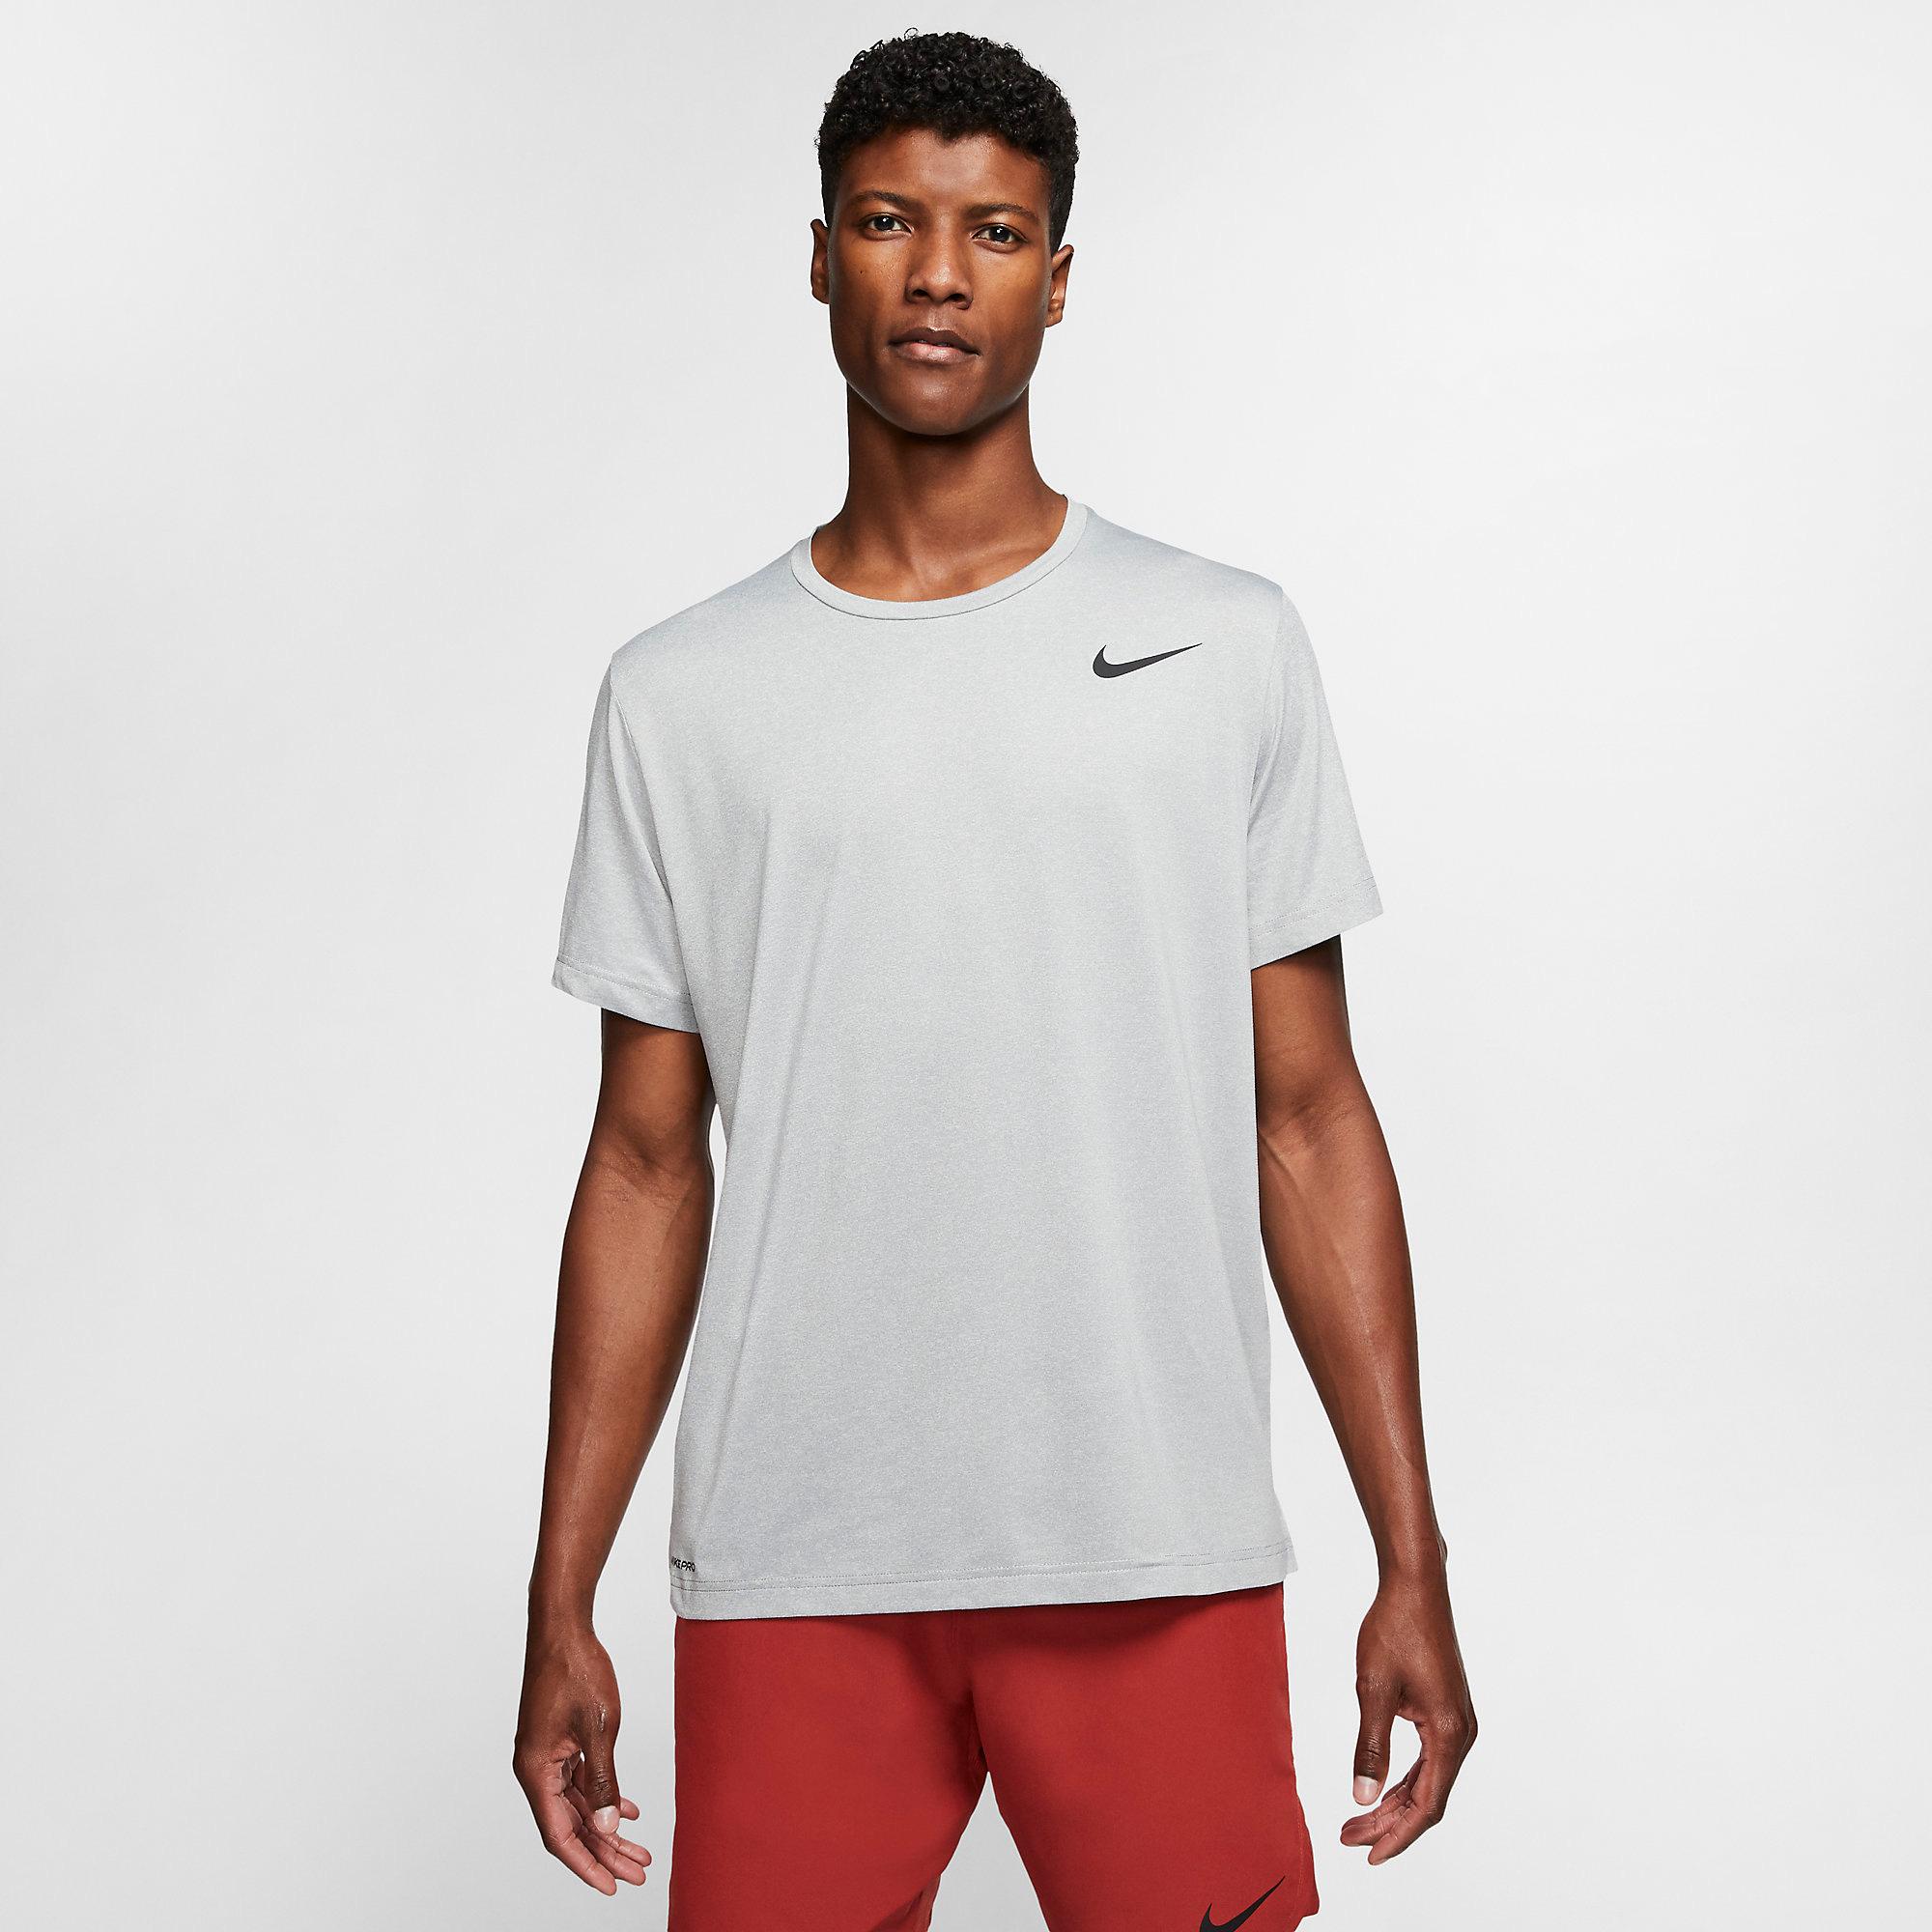 Nike Mens Pro Short Sleeve Top - Grey - Tennisnuts.com